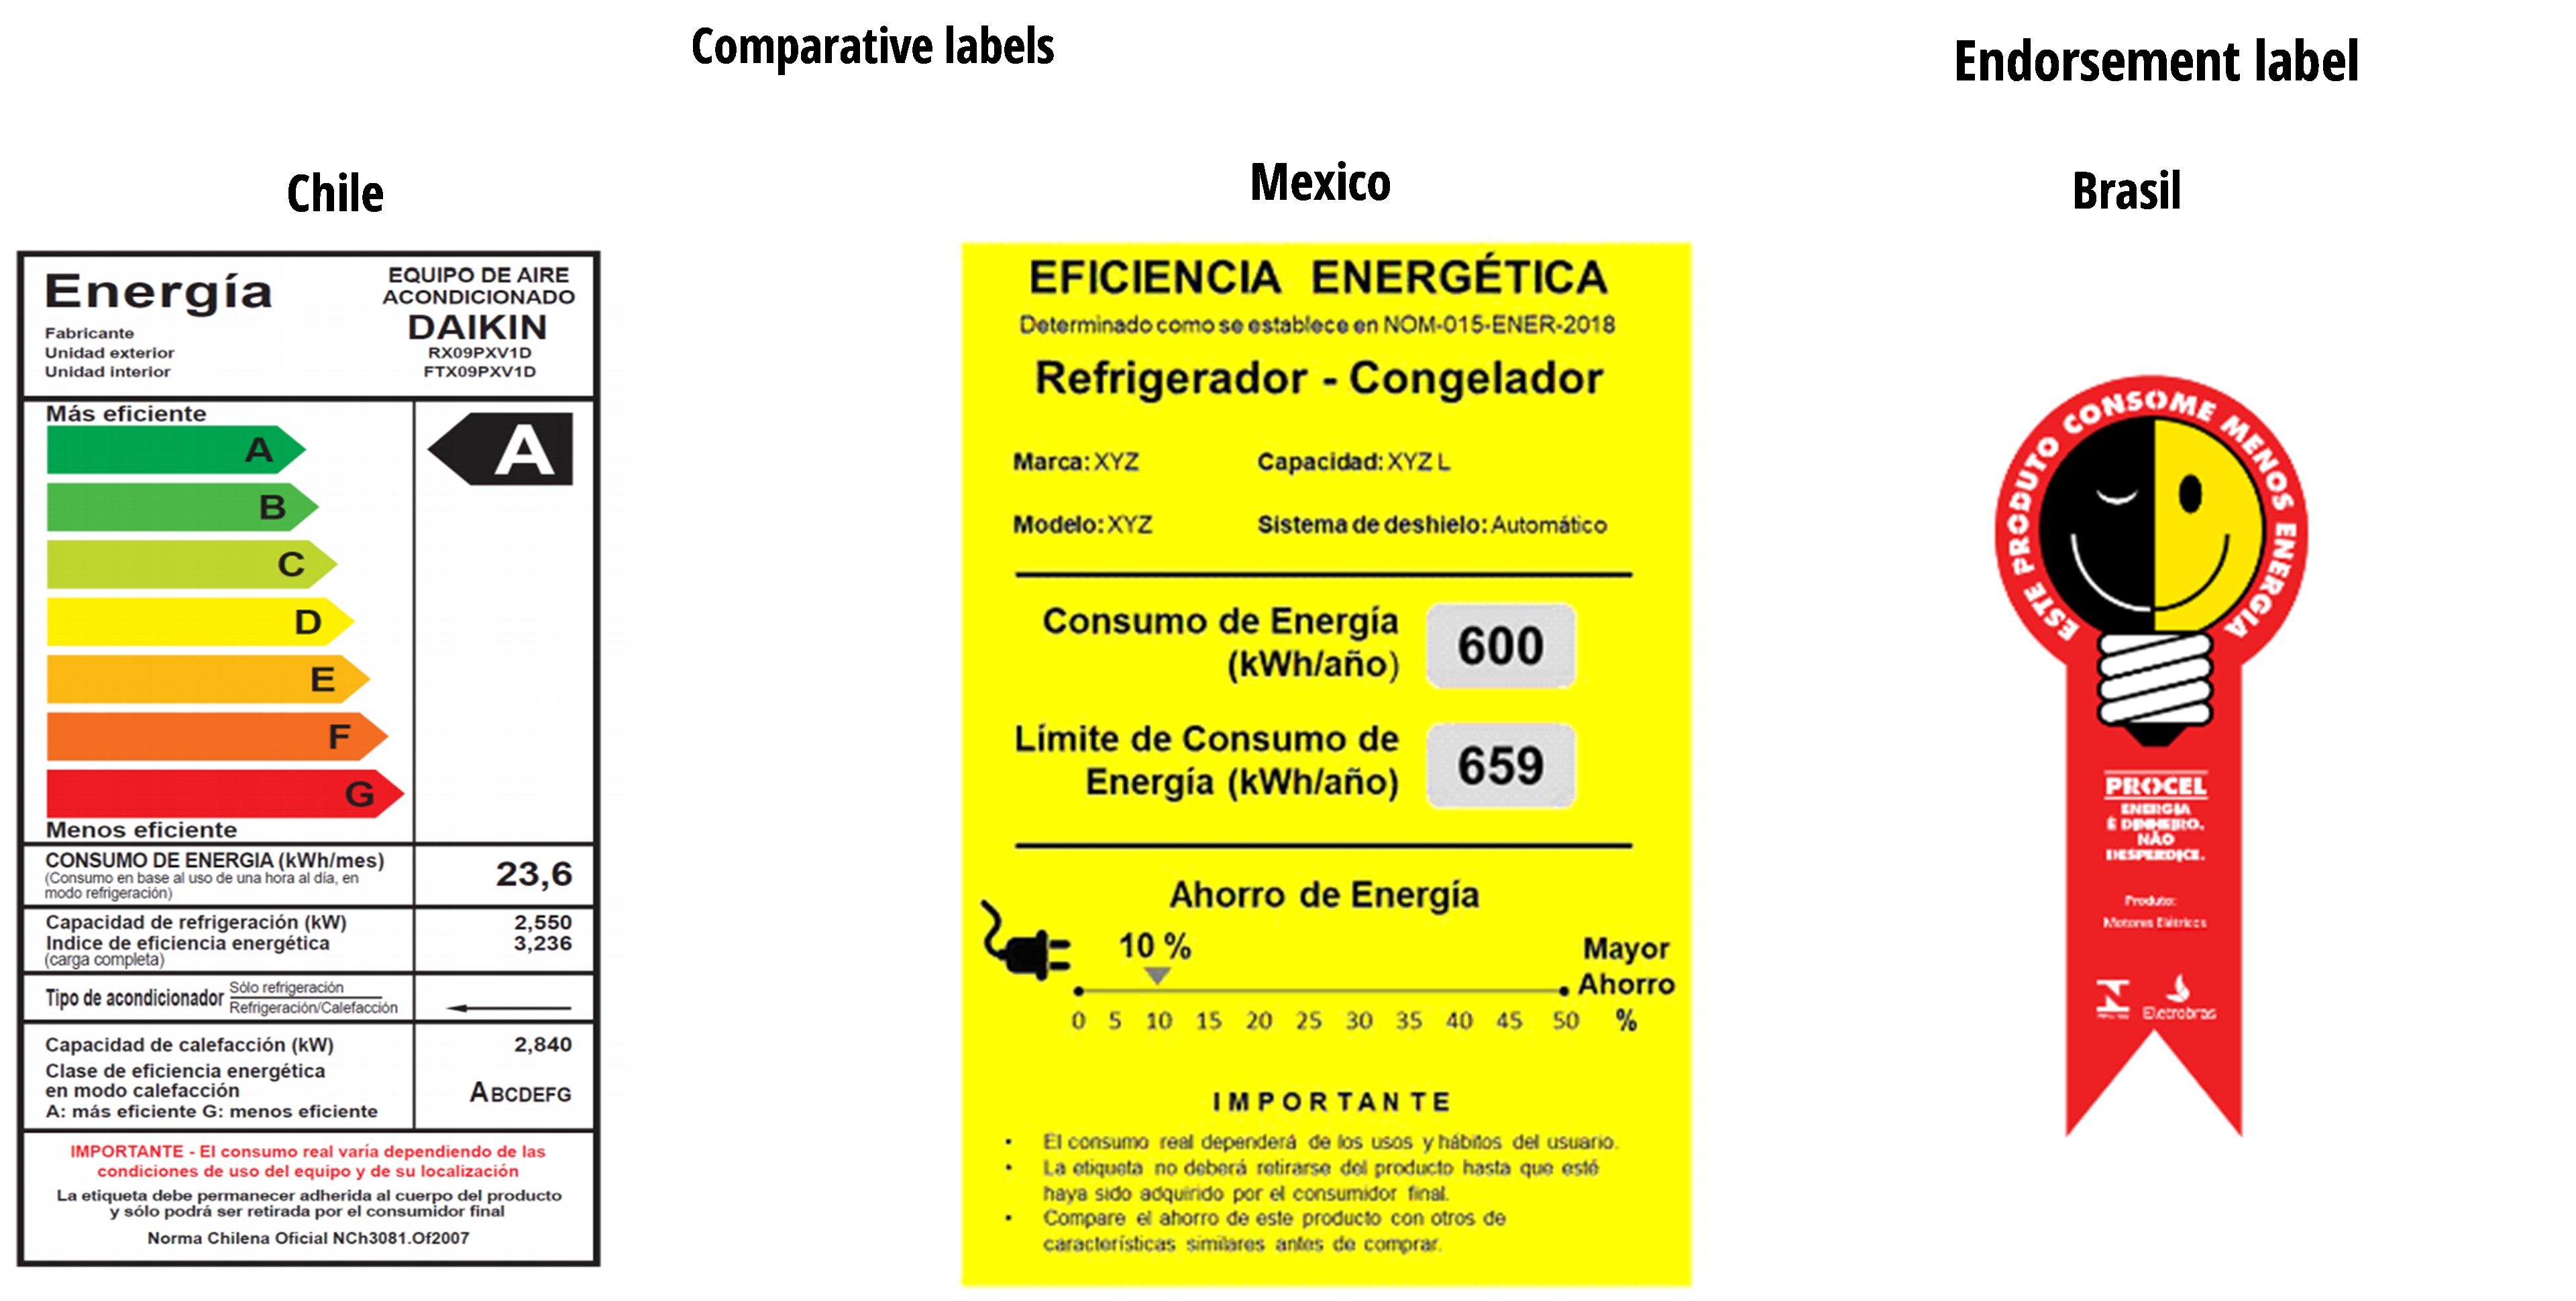 Examples of energy efficiency labels